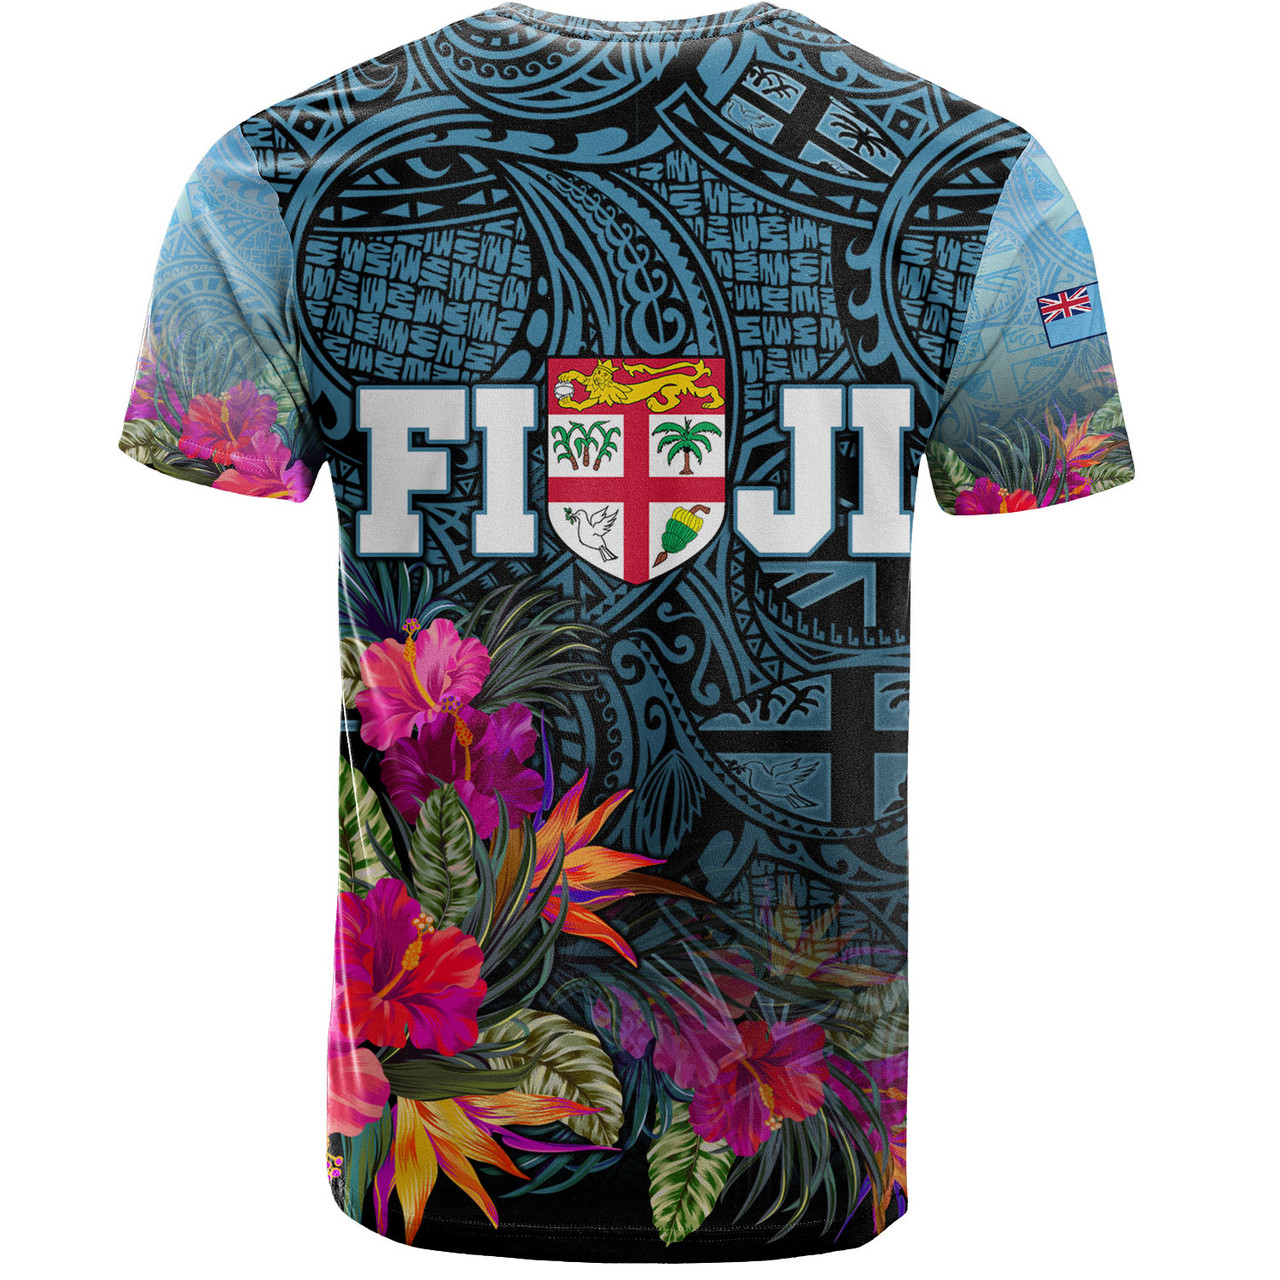 Fiji T-Shirt - Fiji Seal With Tapa Patterns Tropical Flowers Design